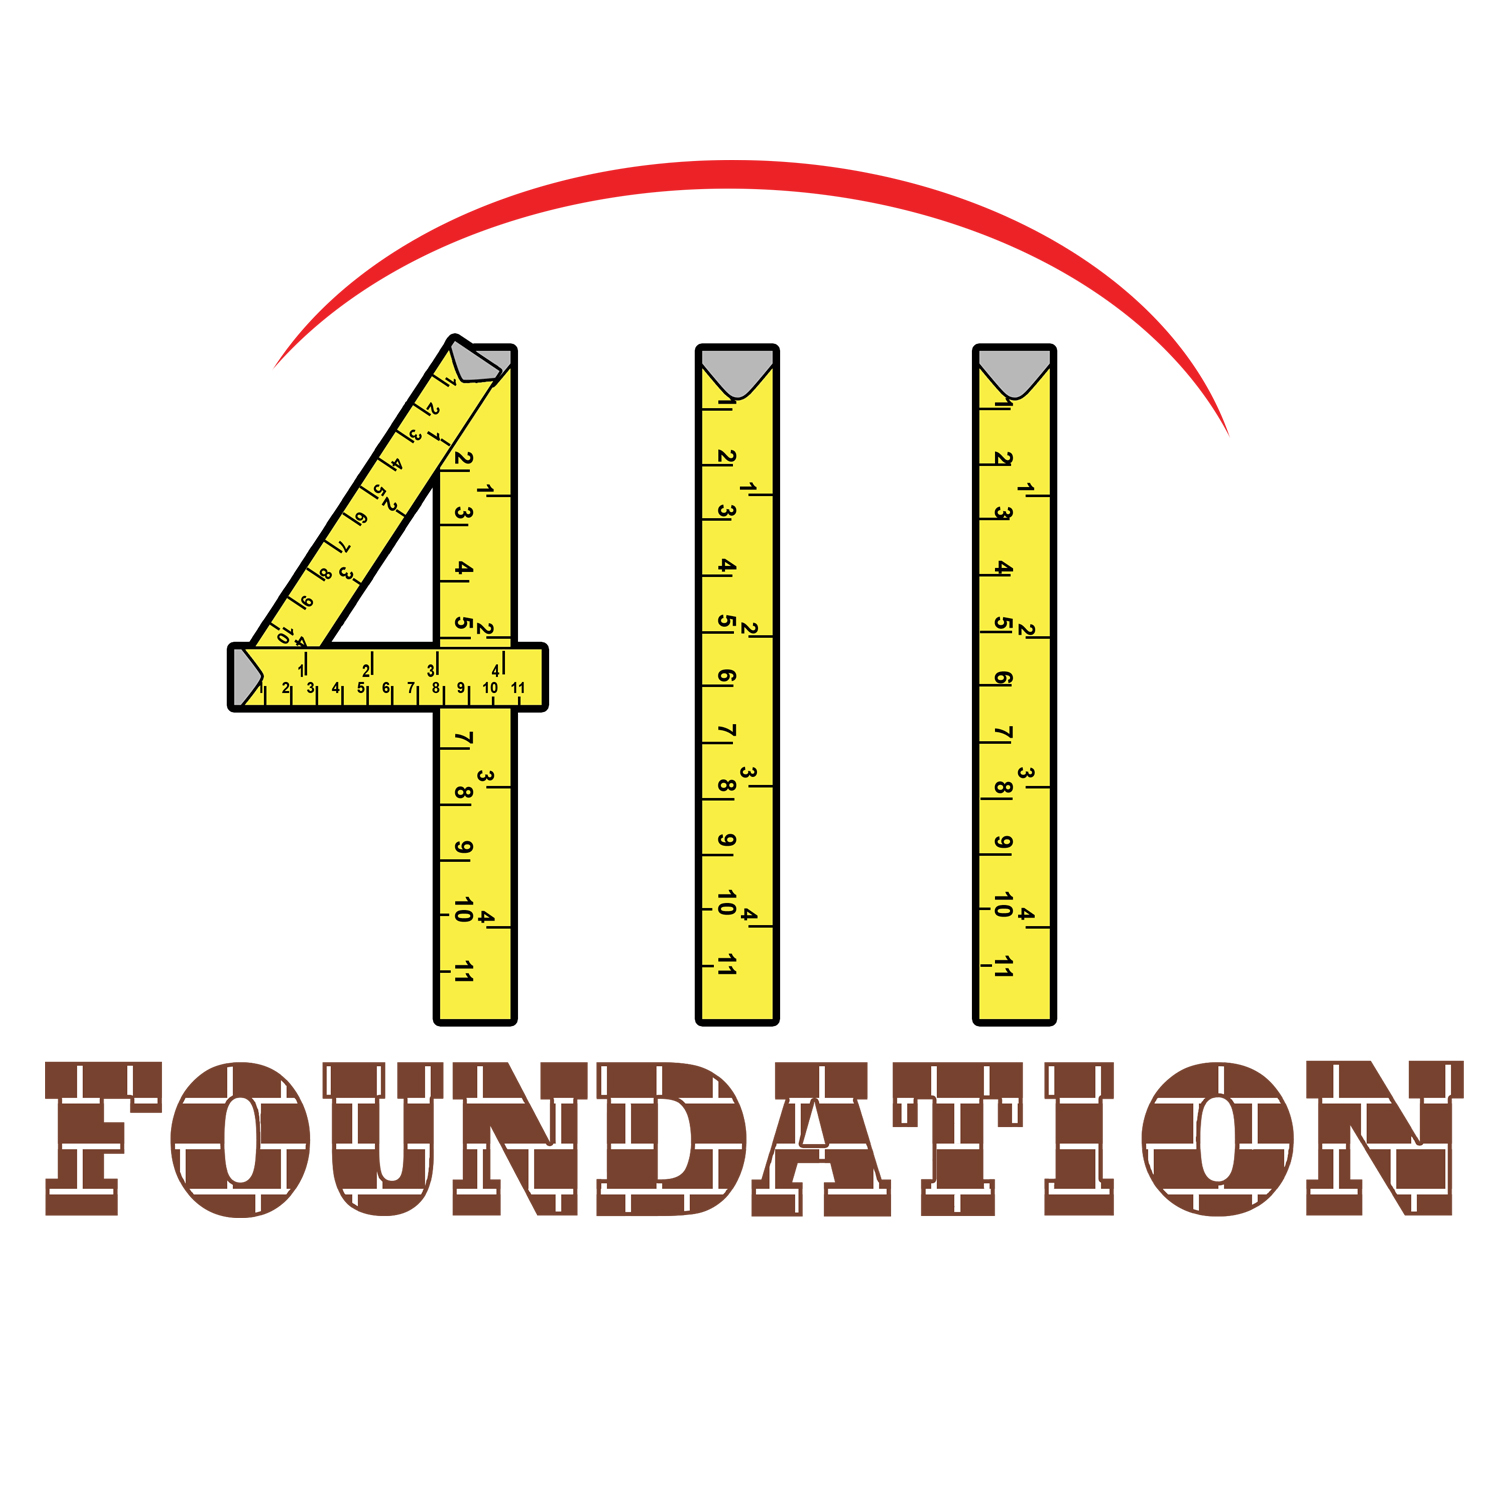 The 411 Foundation logo